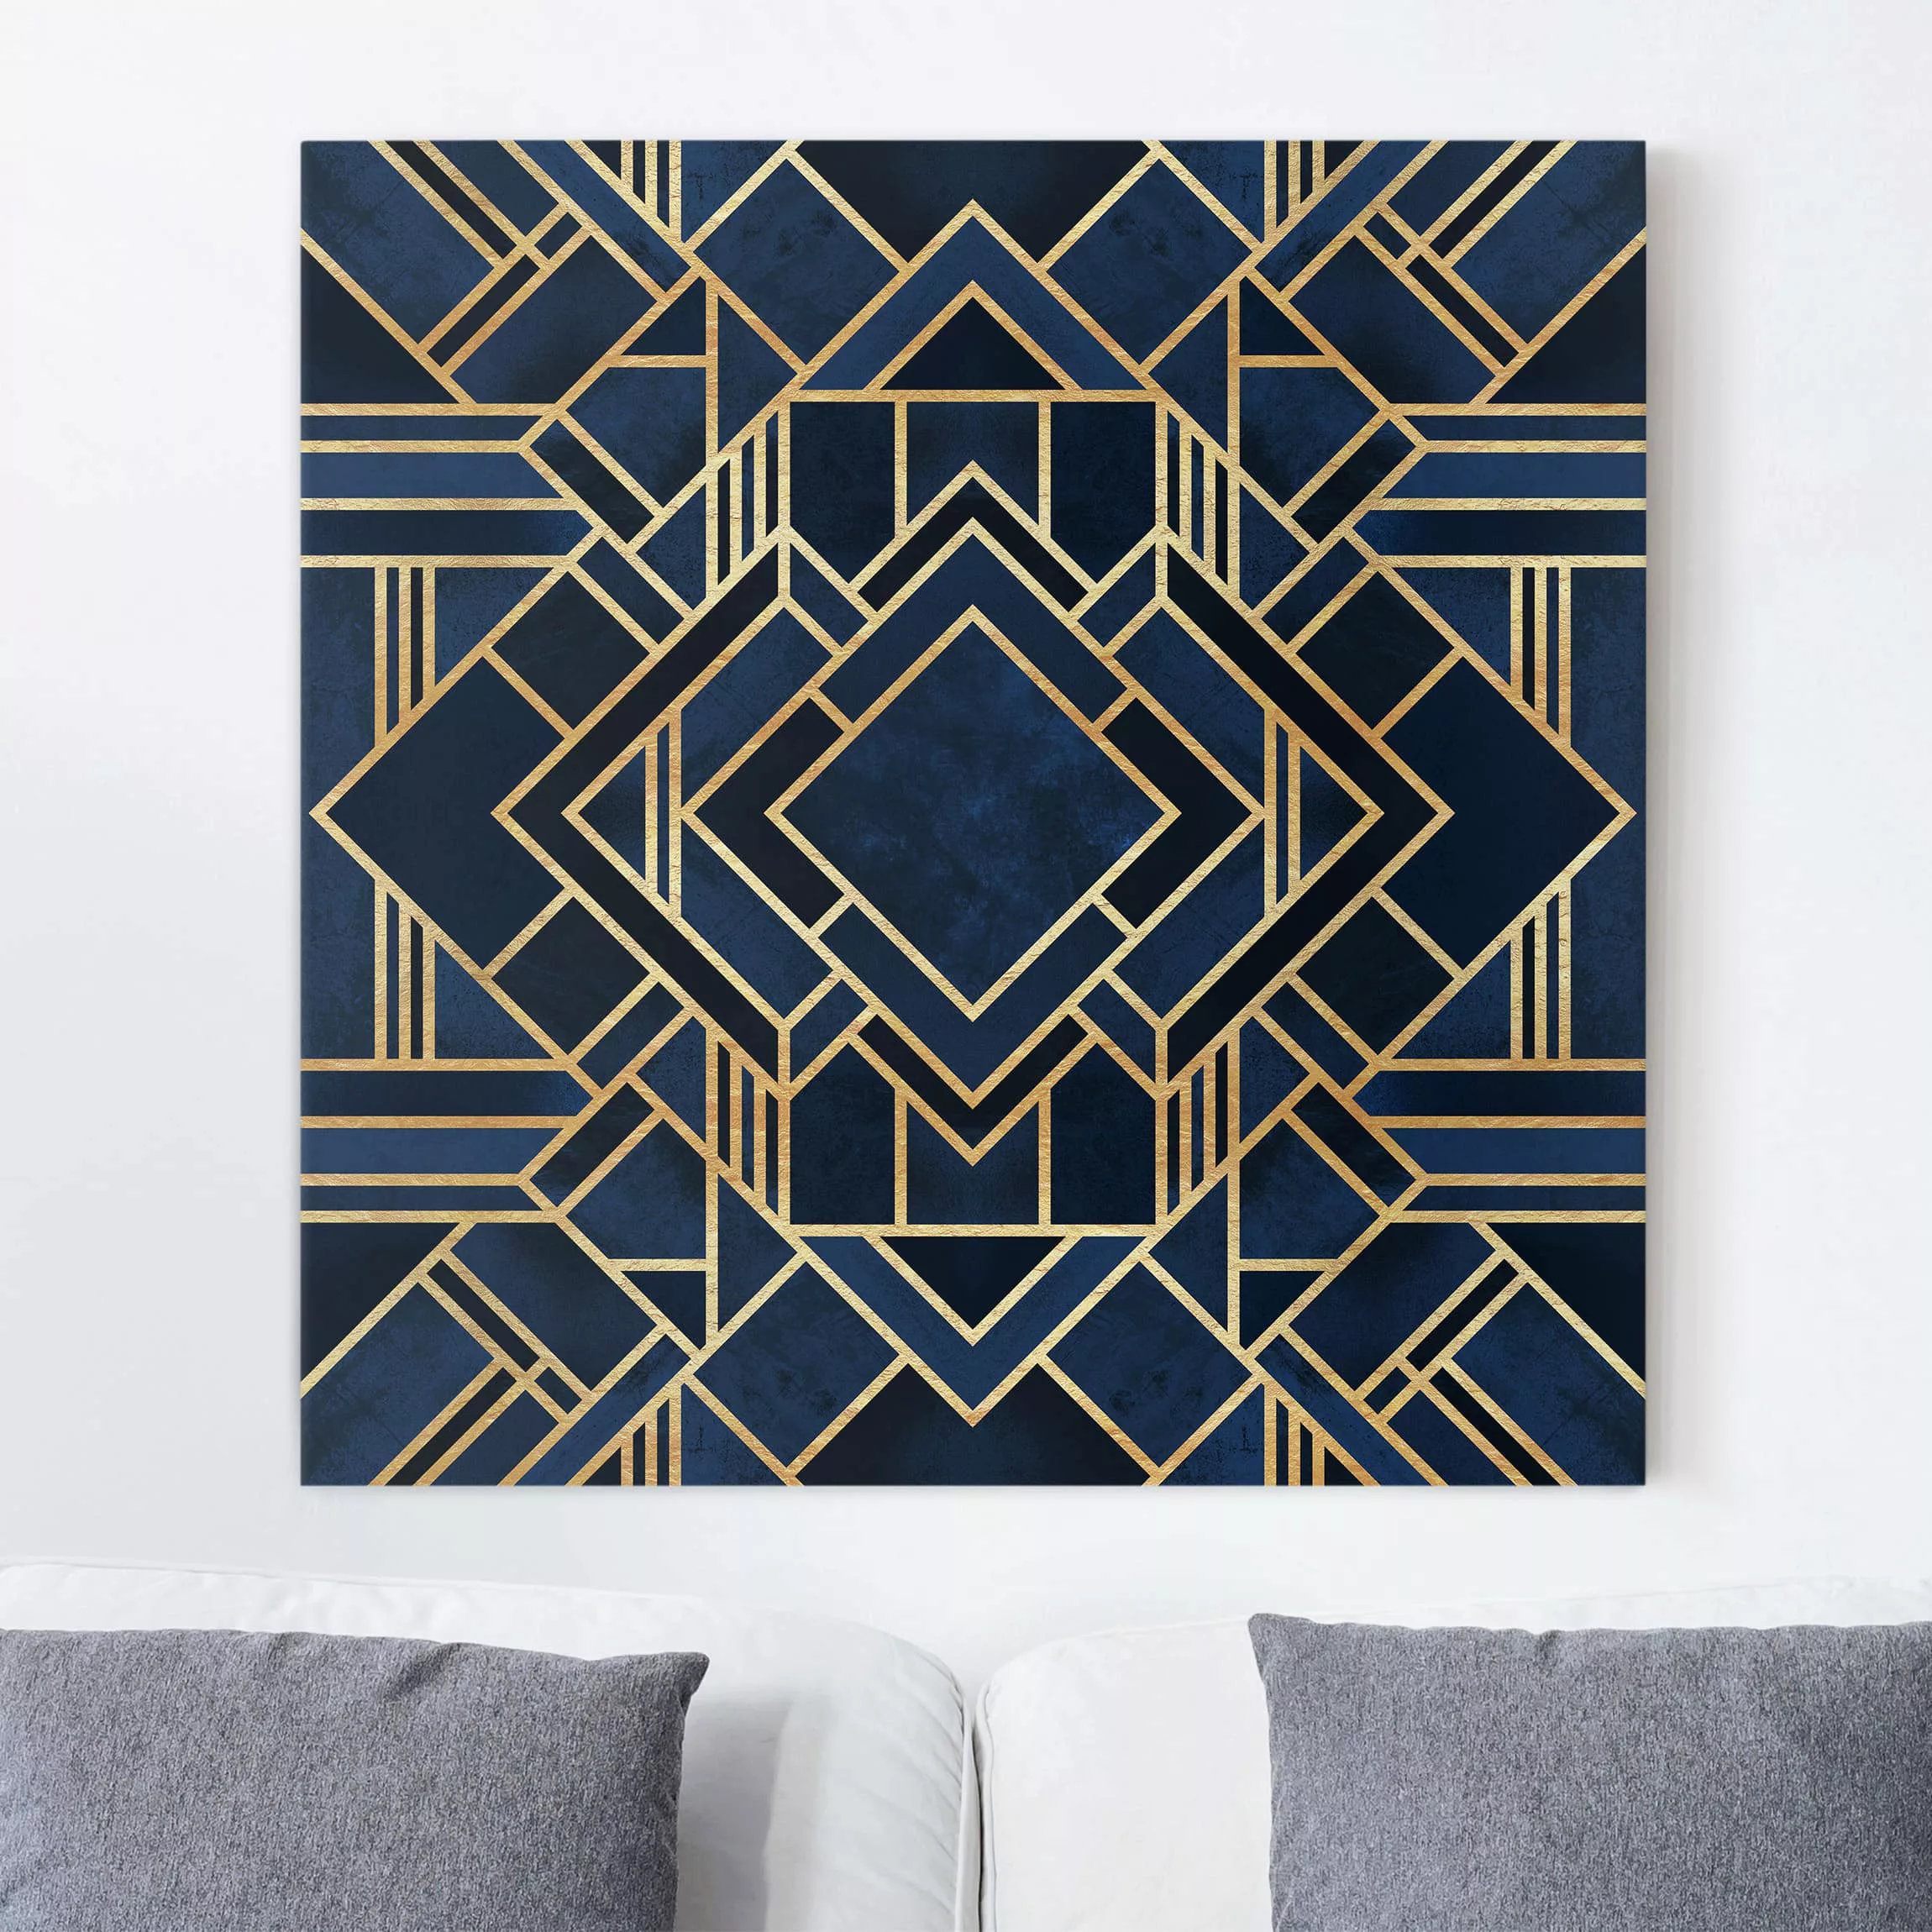 Leinwandbild Abstrakt - Quadrat Art Deco Gold günstig online kaufen